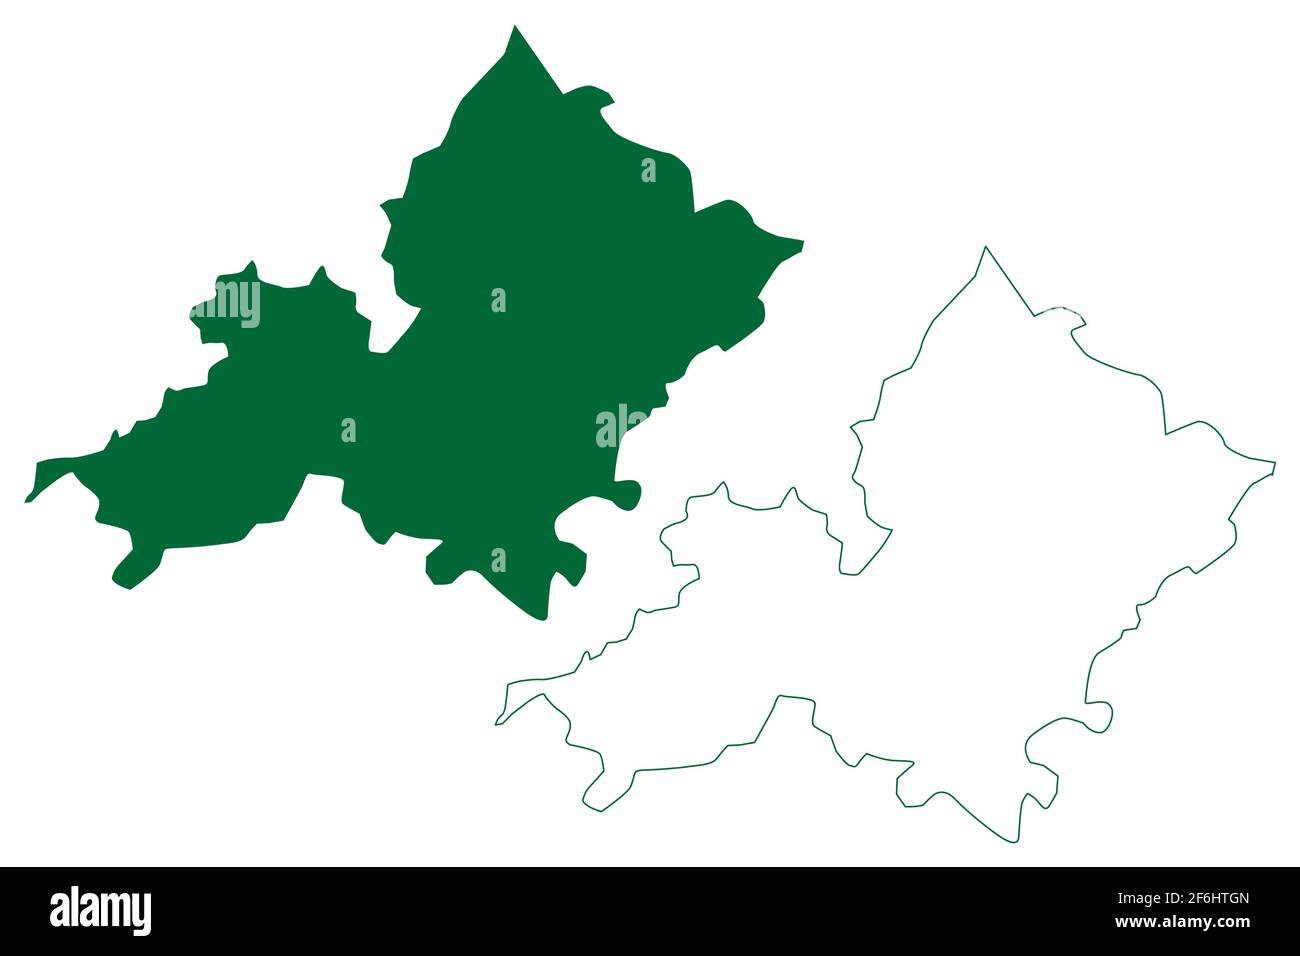 Ambala District Haryana State Republic Of India Map Vector Illustration Scribble Sketch Ambala Map 2F6HTGN 